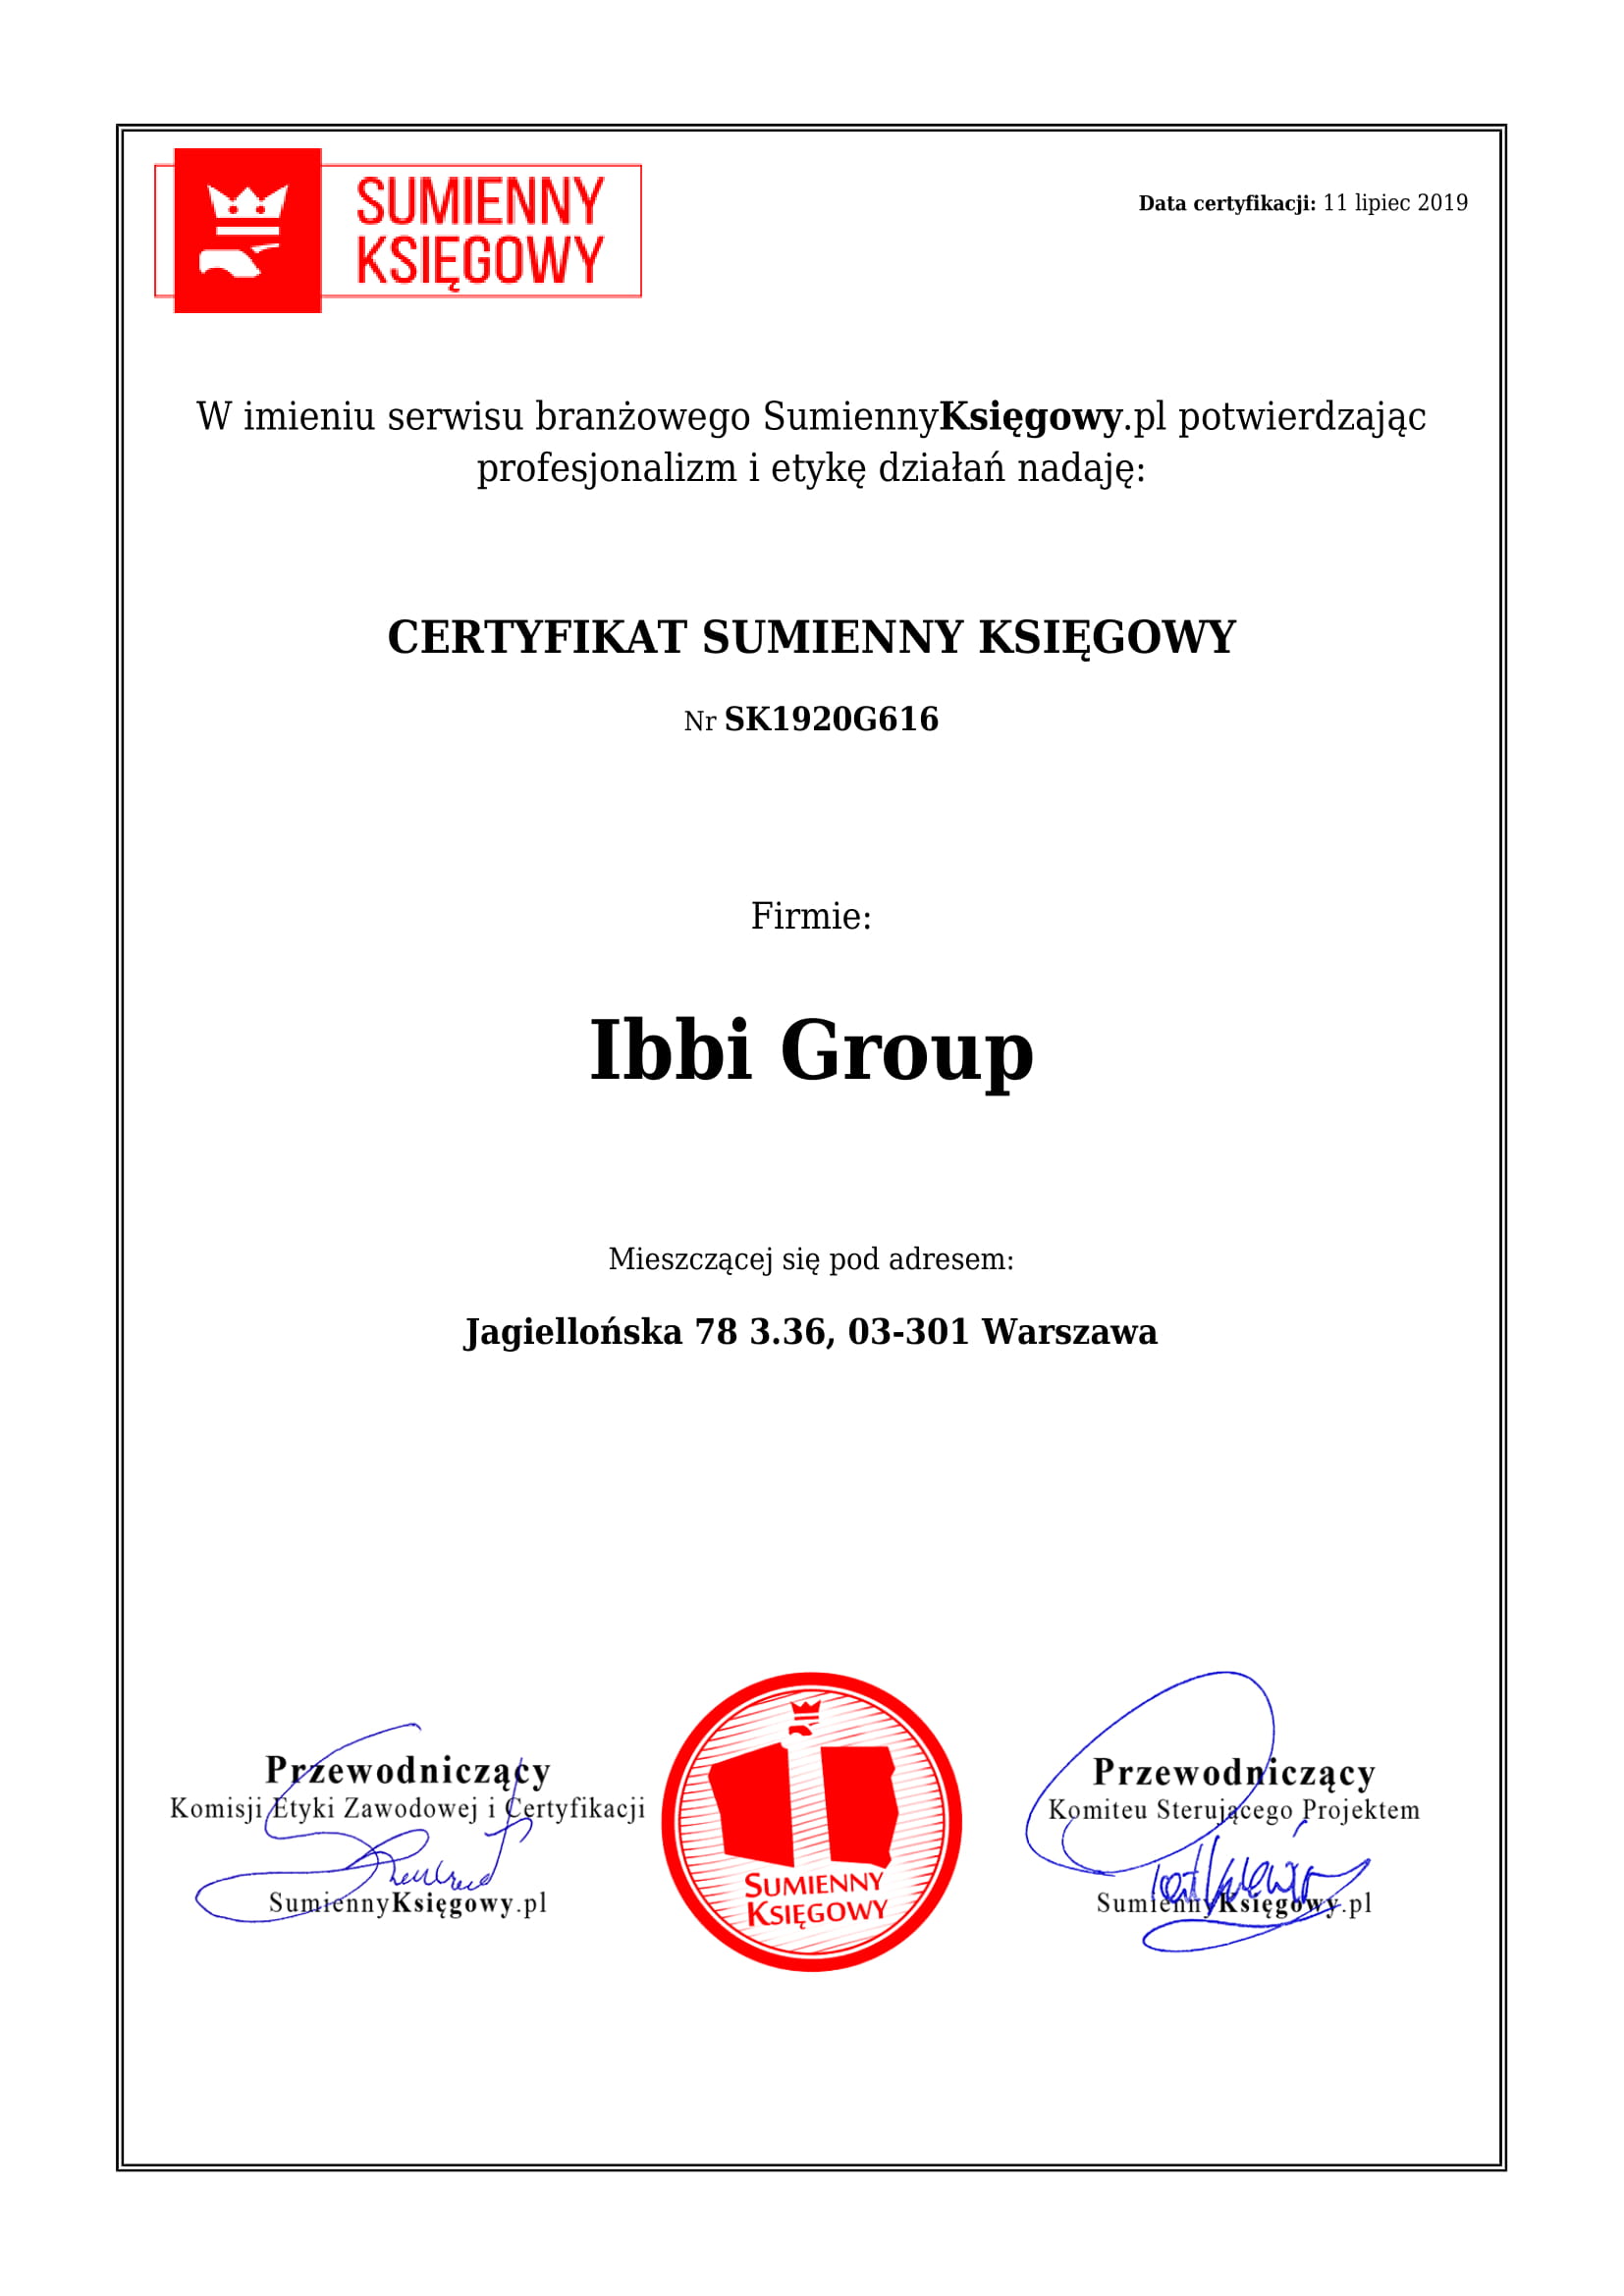 Ibbi Group certyfikat 1